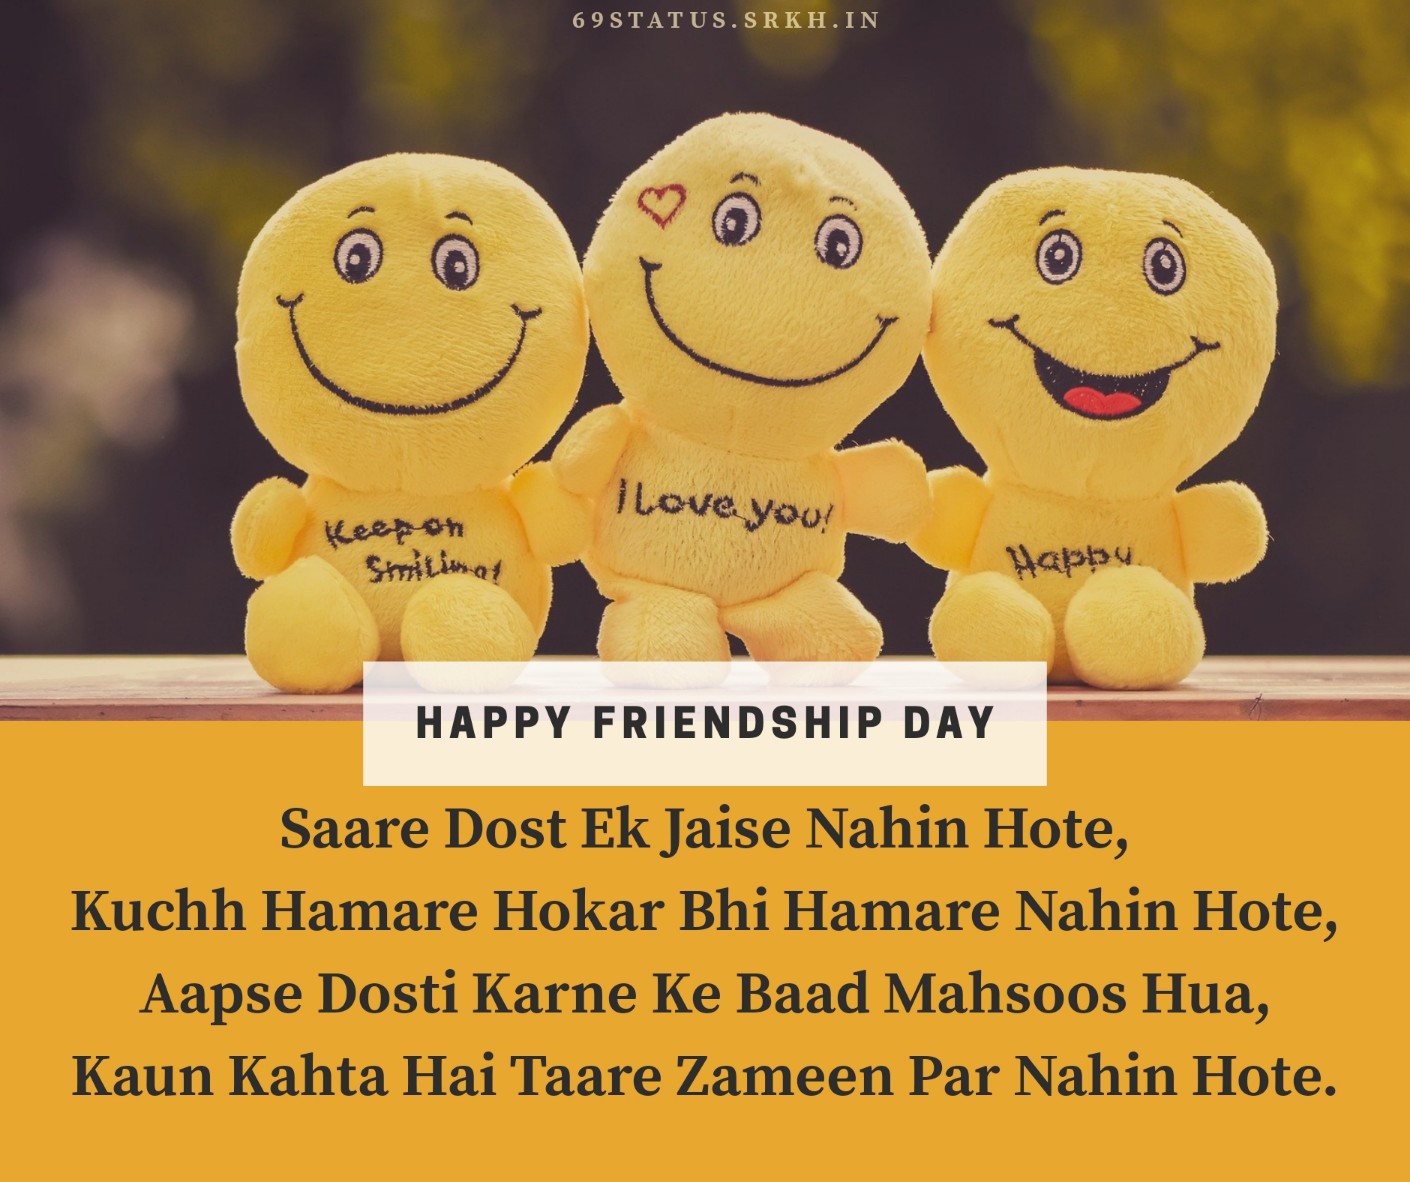 🔥 Friendship Day Shayari Pic HD Download free - Images SRkh